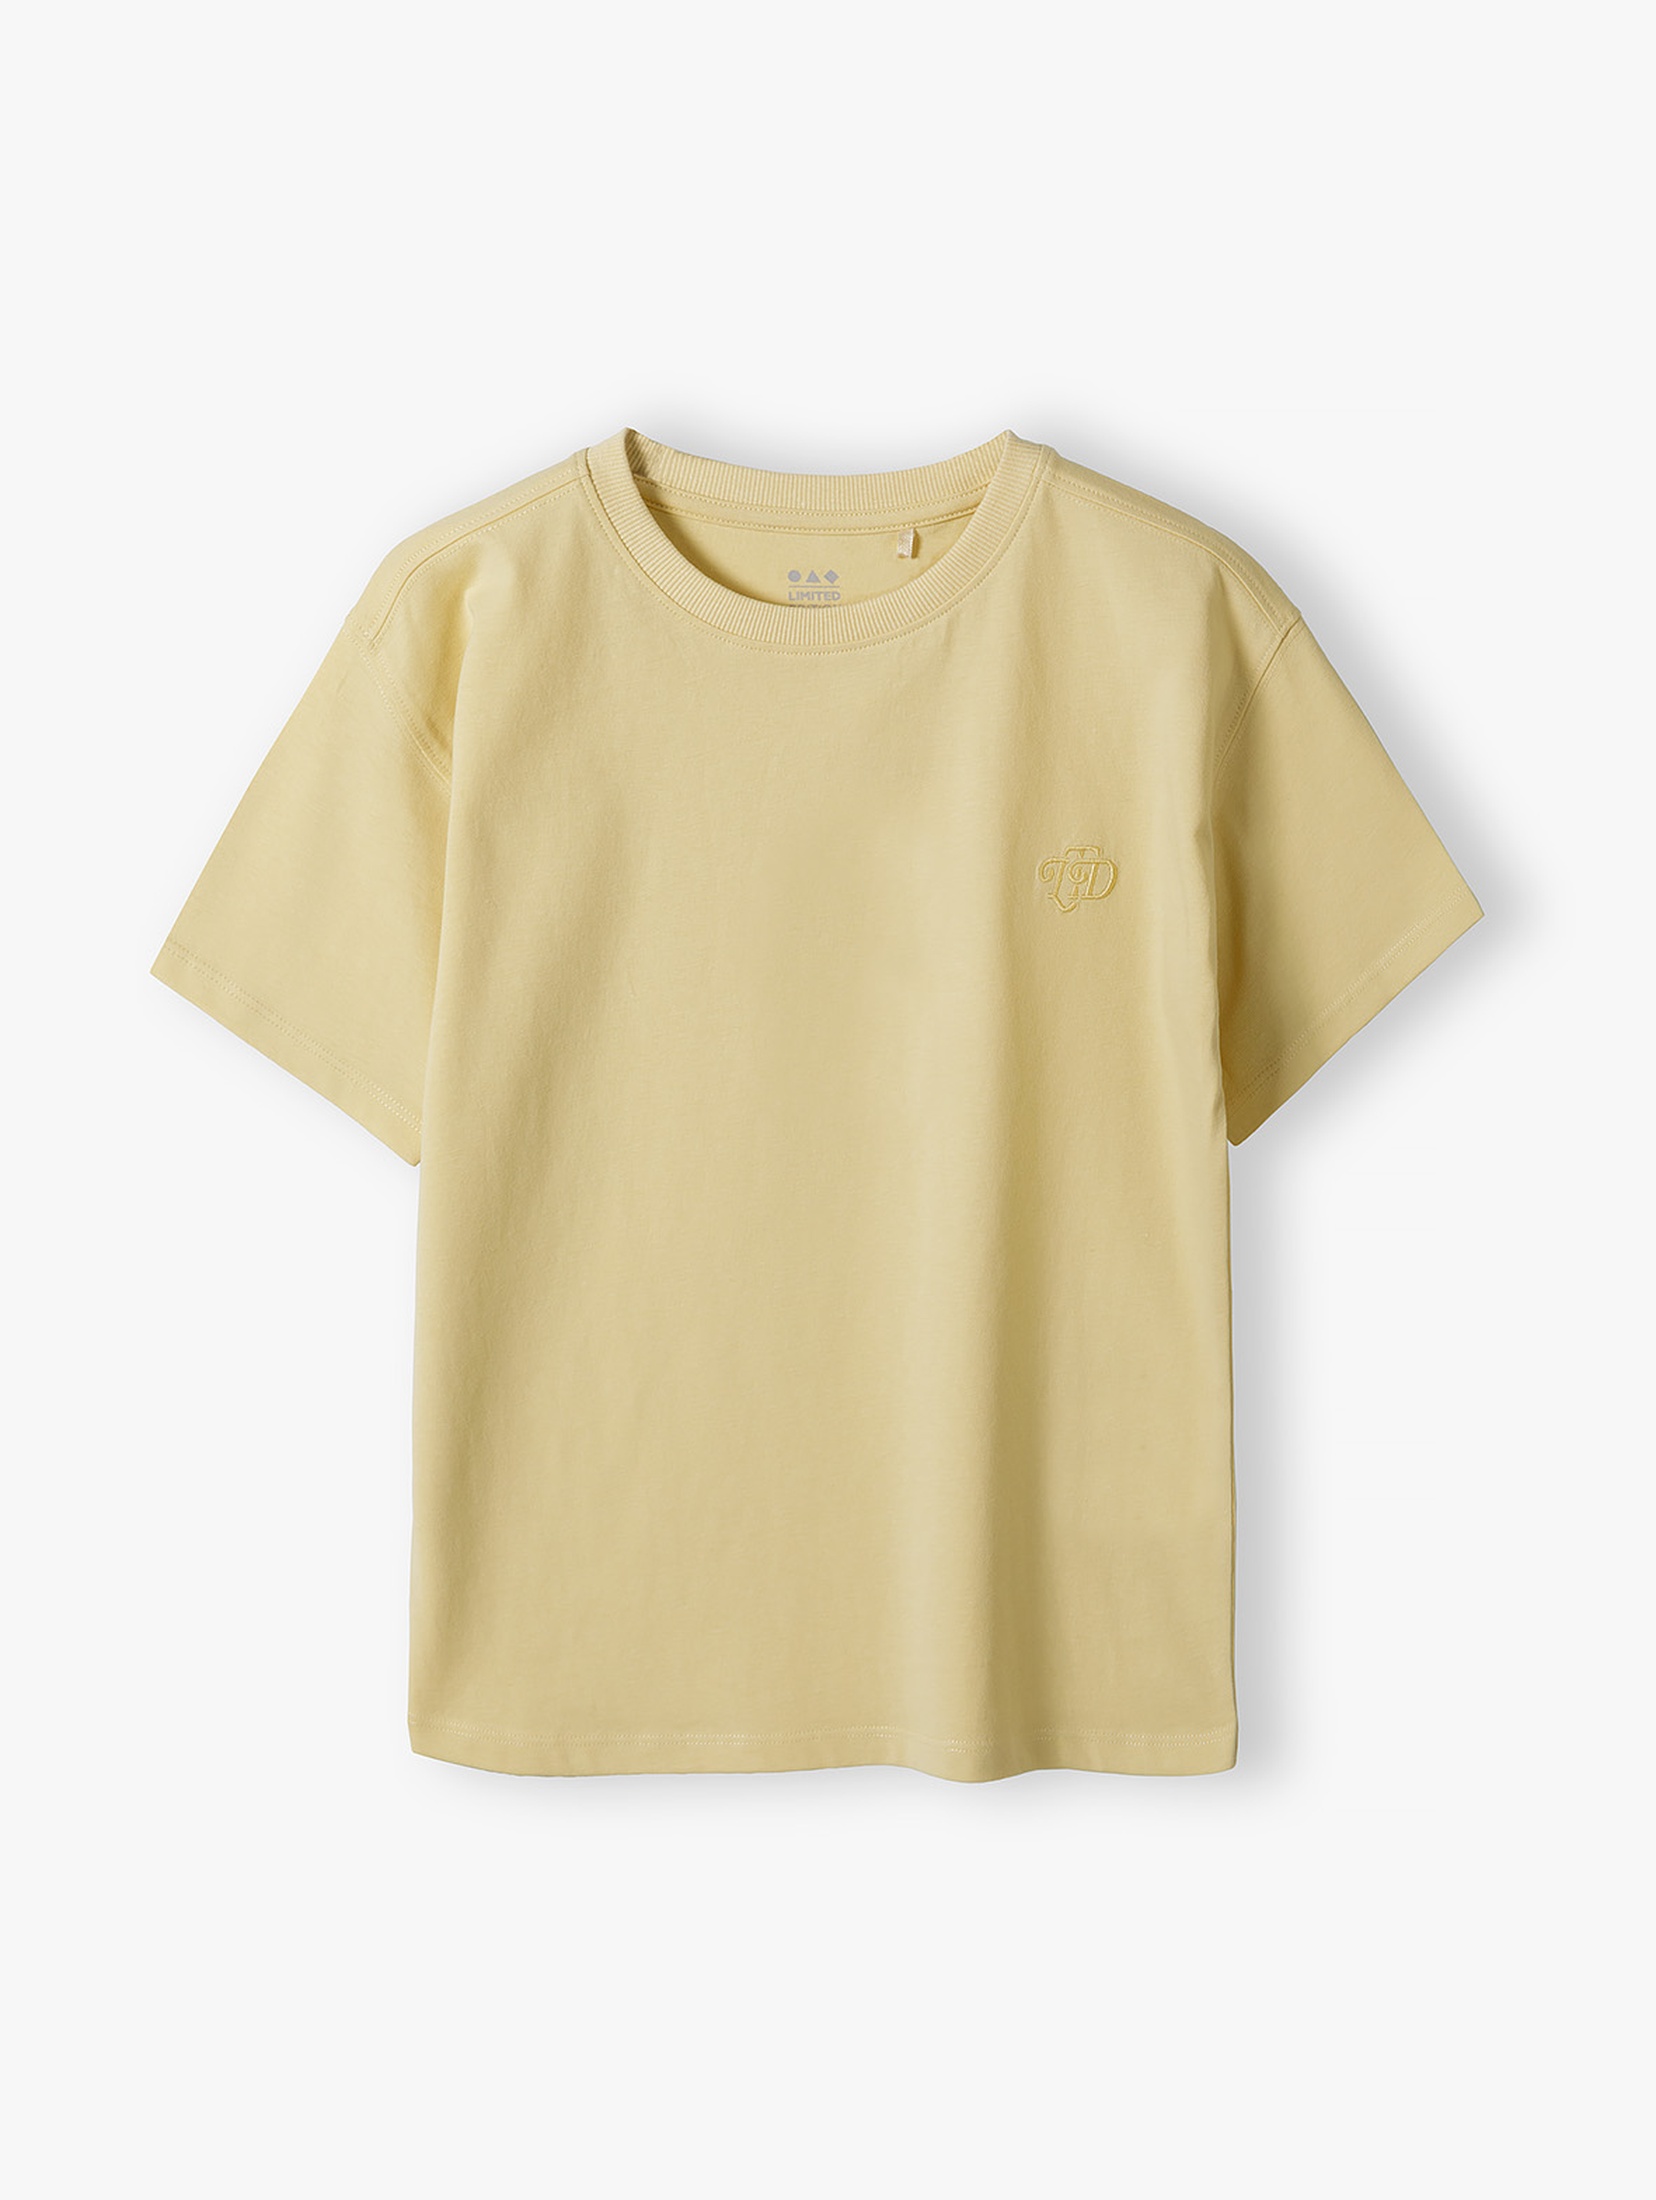 T-shirt dla dziecka - żółty - Limited Edition